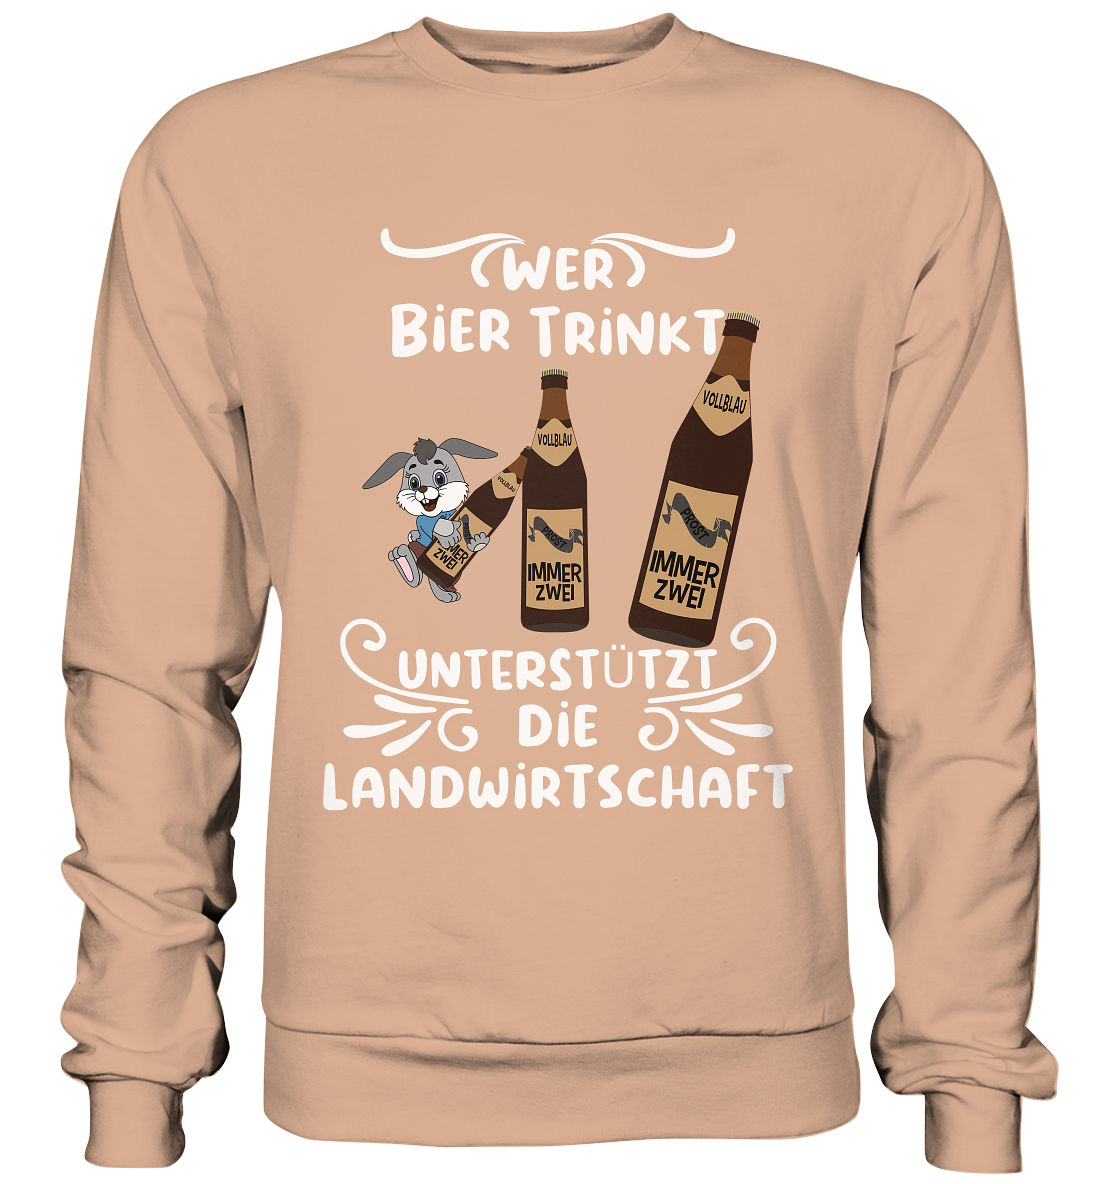 Shirtee-Shop - Bier